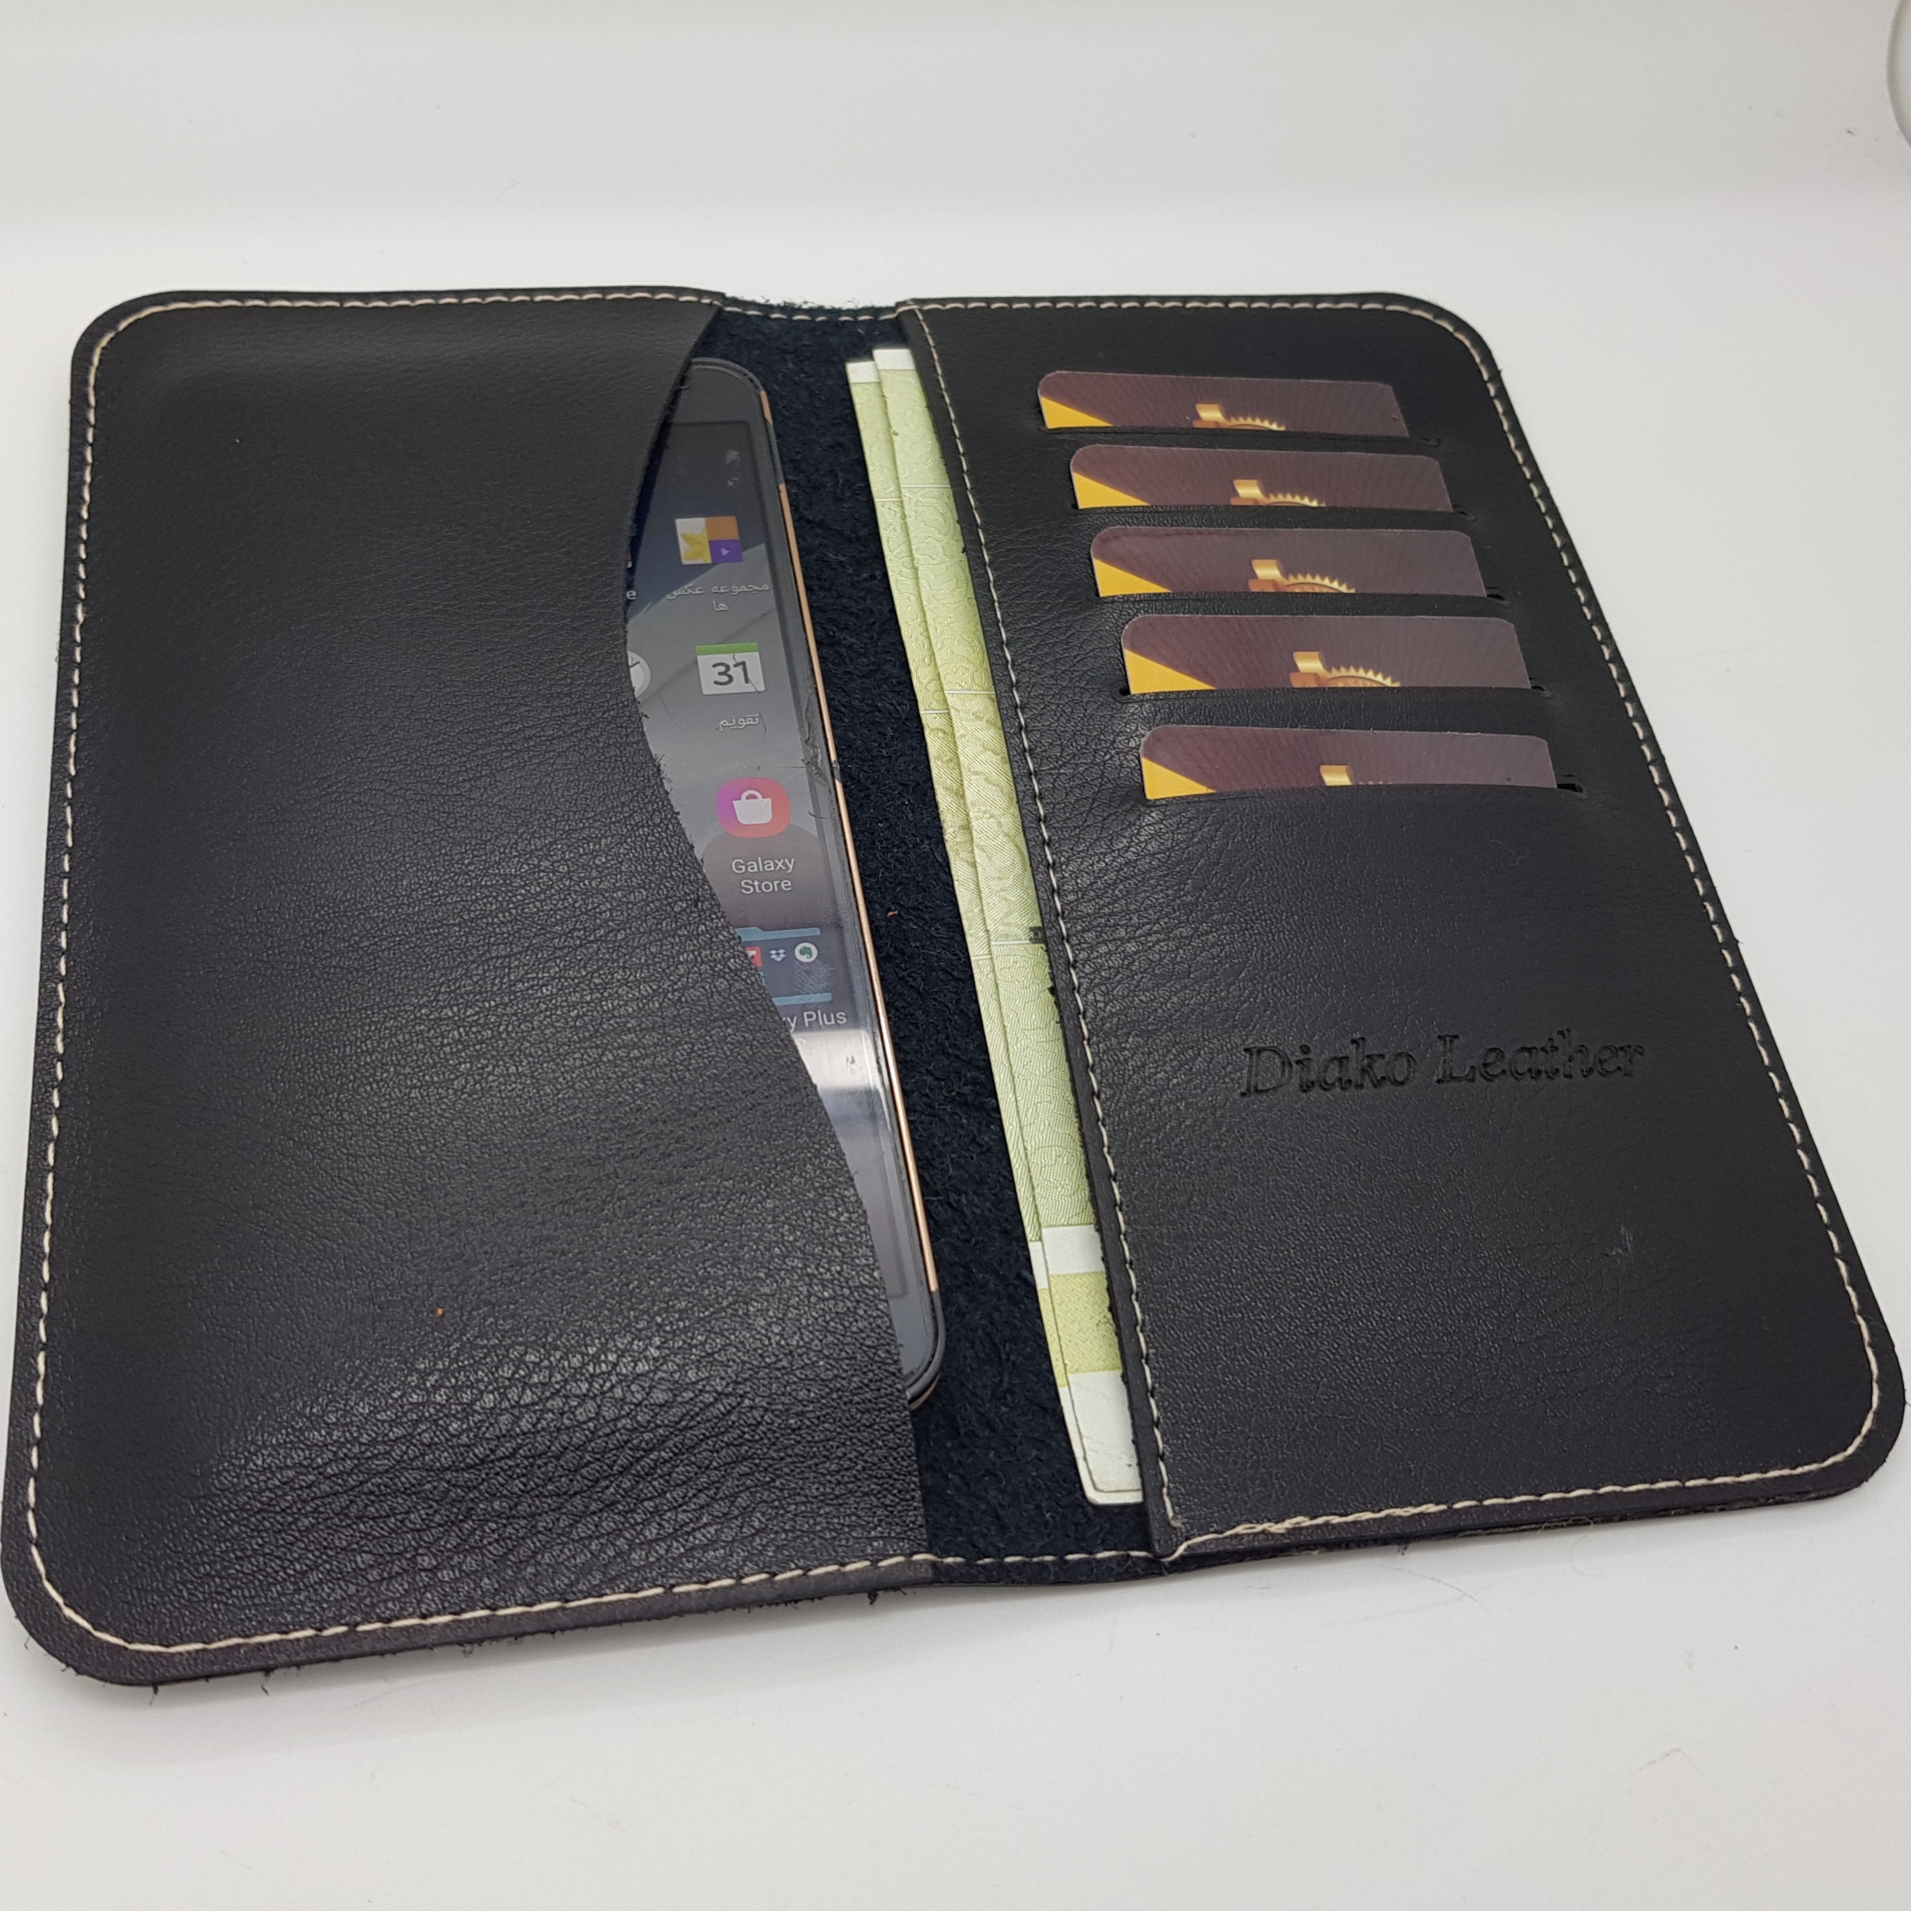 DIYAKO artificial leather wallet, Model 258 